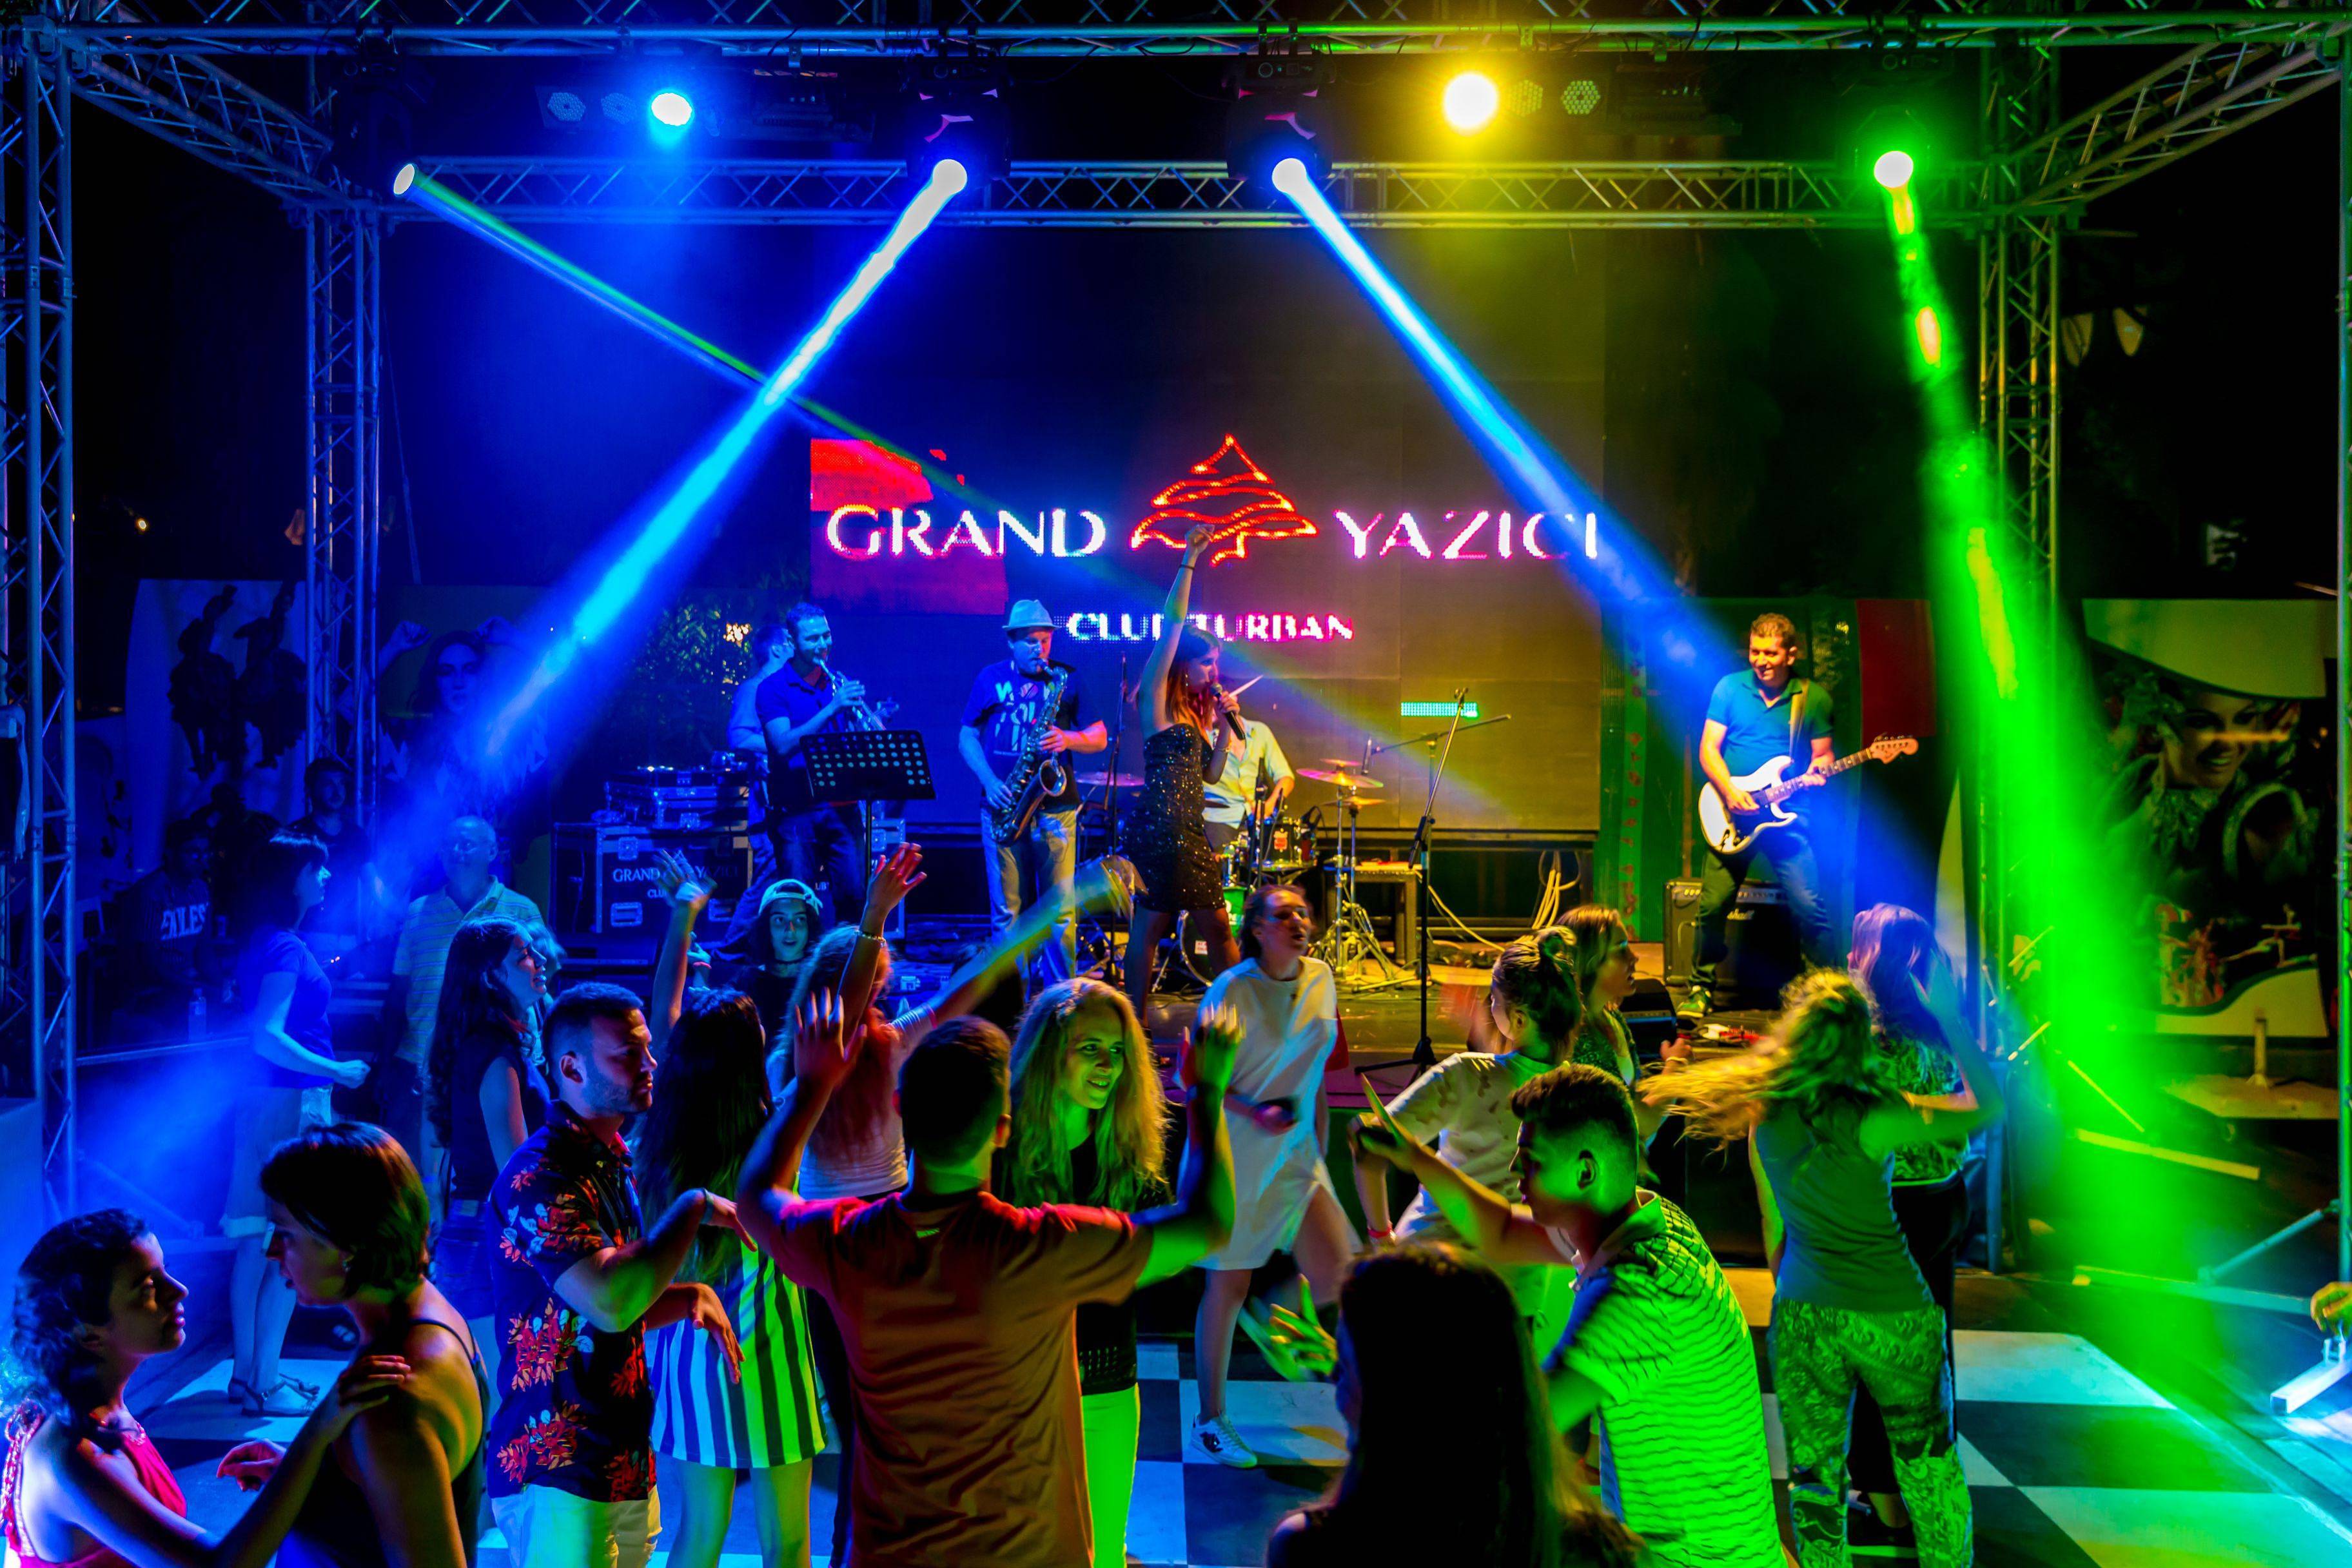 Grand Yazici Club Turban